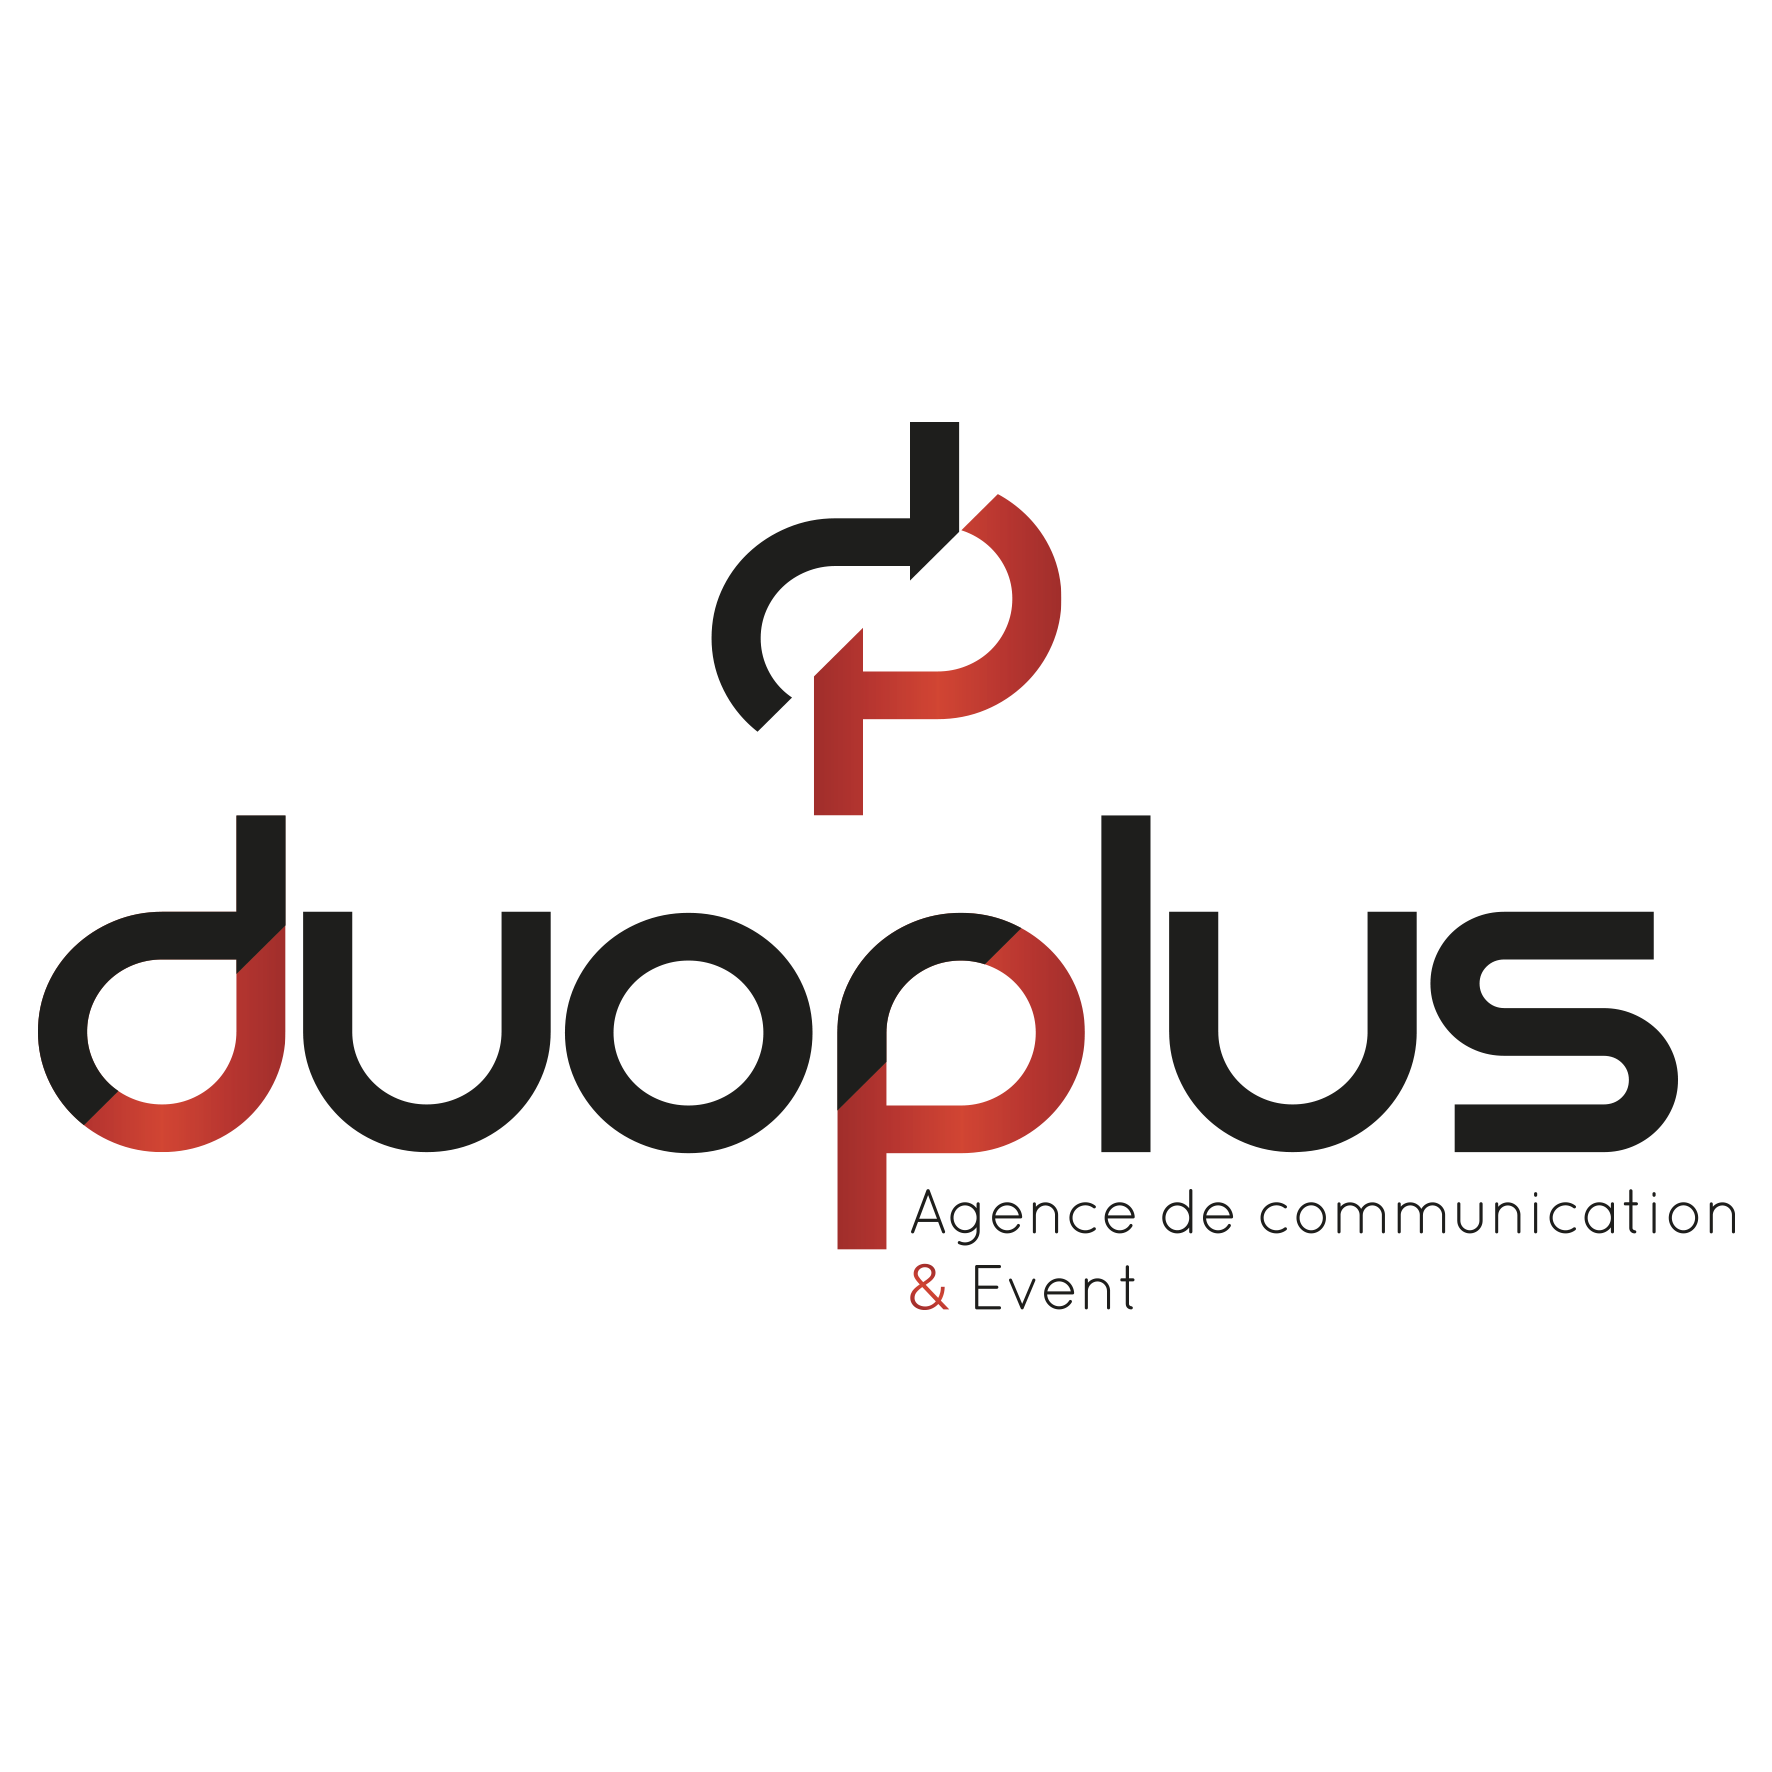 Duoplus